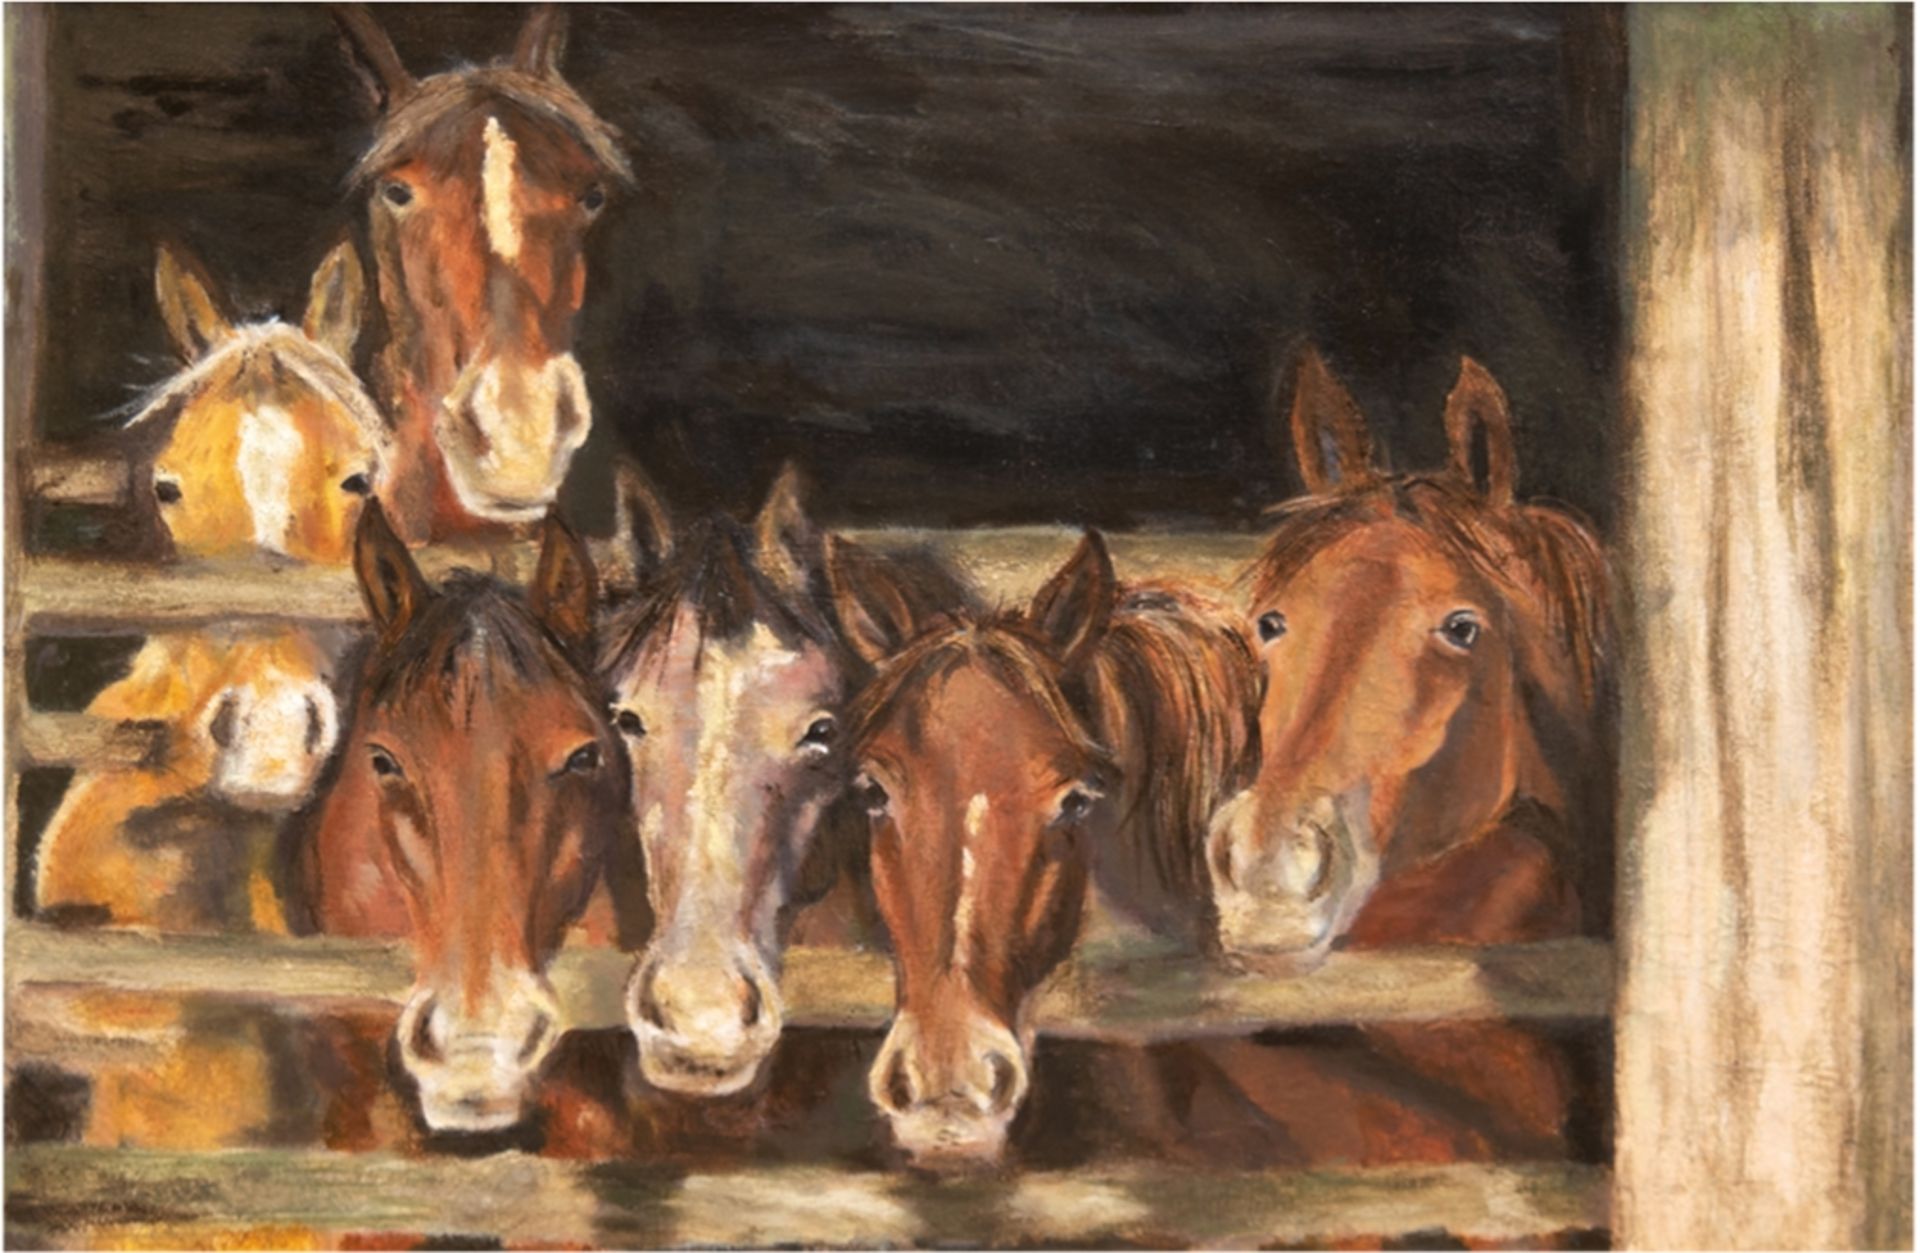 Tiermaler des 19. Jh. "Pferd aus dem Stall schauen", Öl/Lw., unsign., 1 Hinterlegung, 64x90 cm, Rah